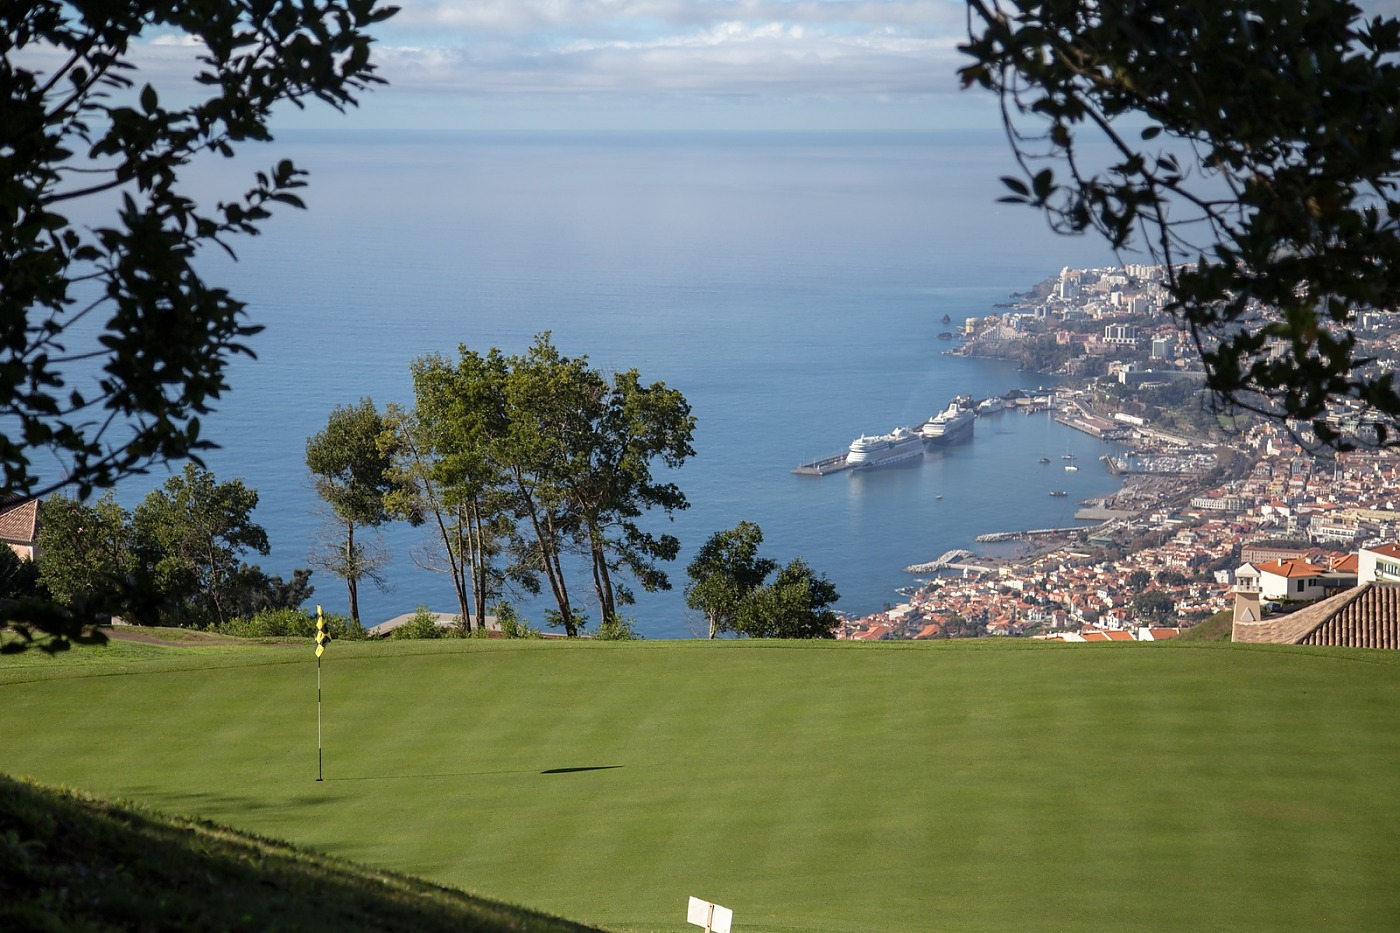 Tid fangst salut Madeira - Palheiro Golf Course - Golf Courses - Golf Holidays in Portugal -  Golf Packages & Golf Hotels Lisbon, Algarve